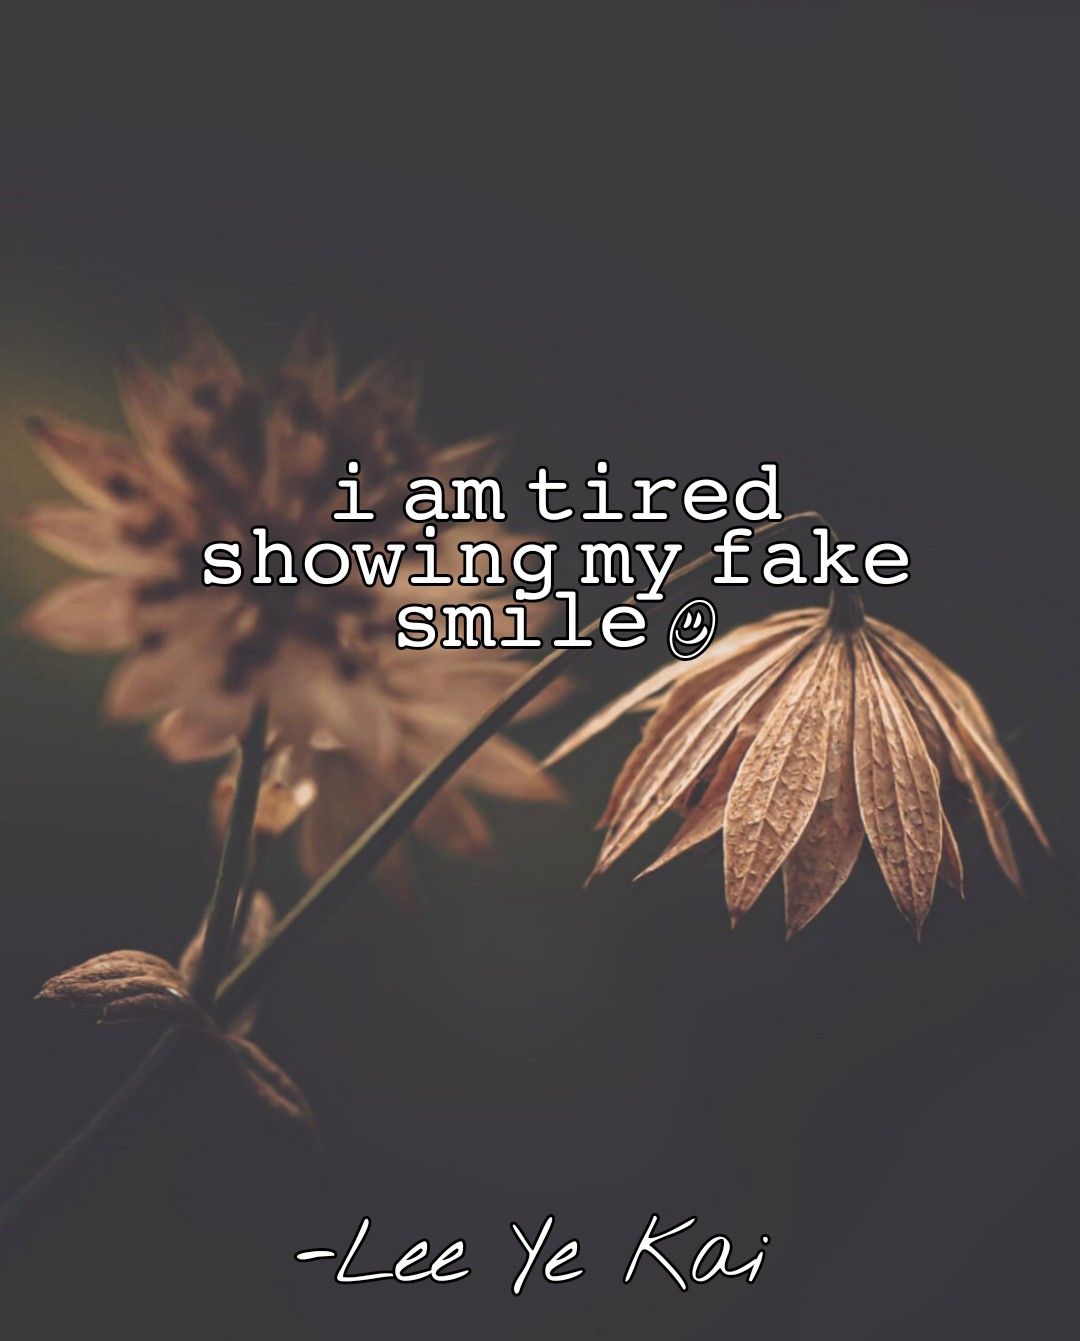 I am tired showing my fake smile - Sad